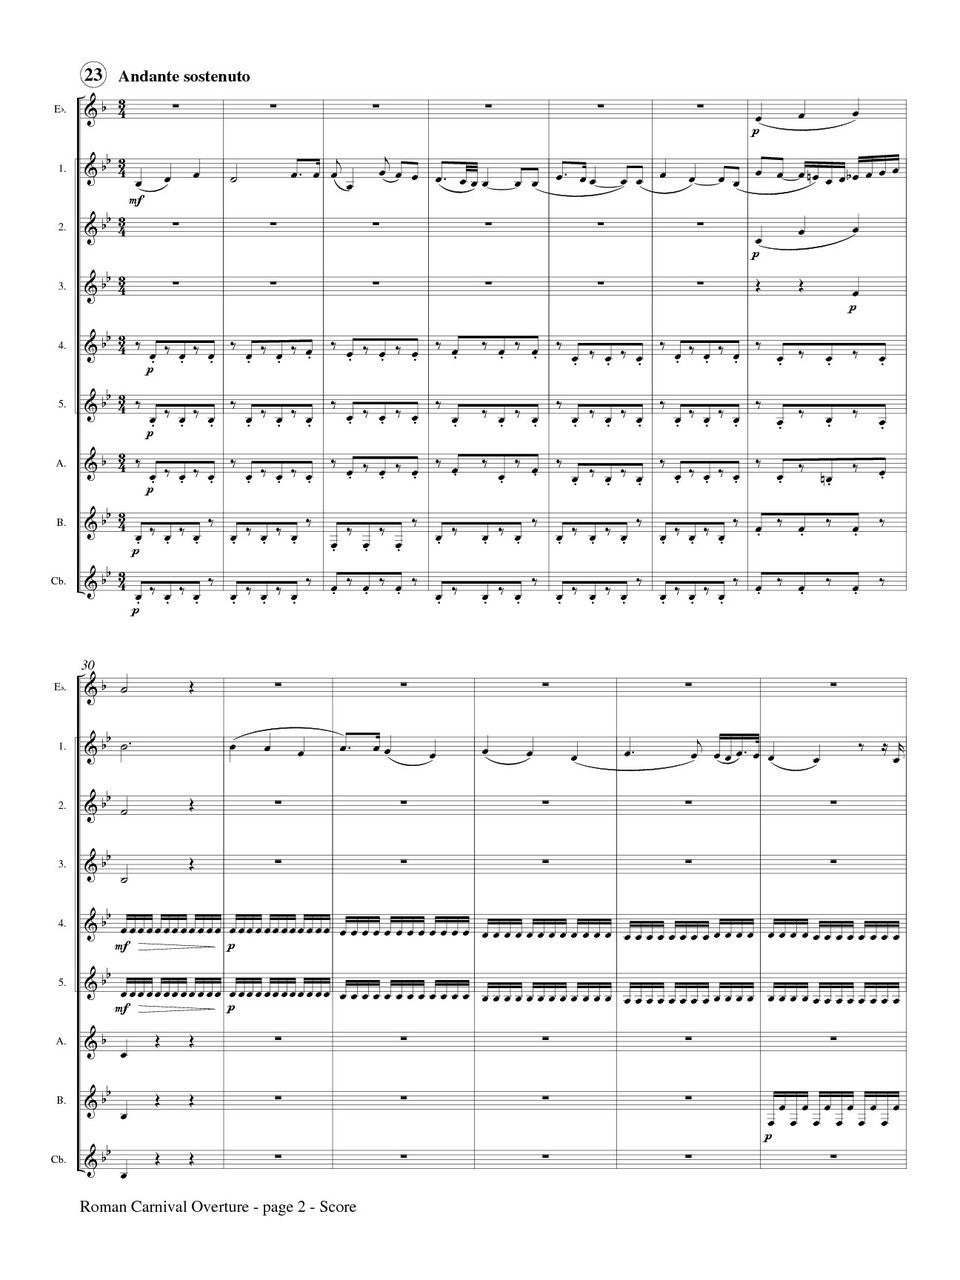 Berlioz (arr. Matt Johnson) - Roman Carnival Overture for Clarinet Choir